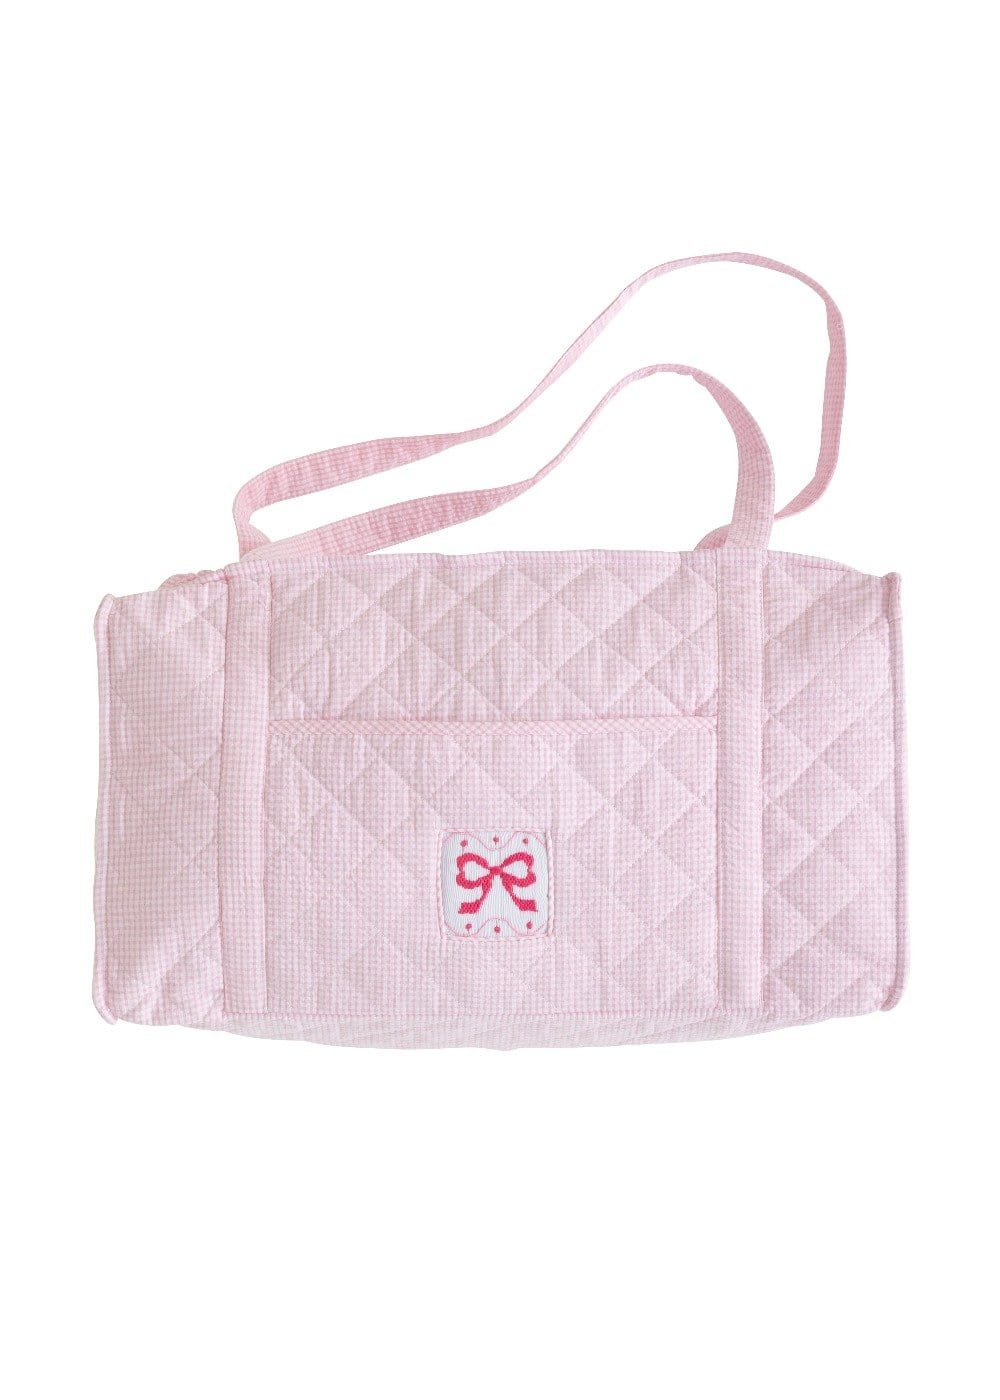 seguridadindustrialcr classic children's luggage pink bow duffle